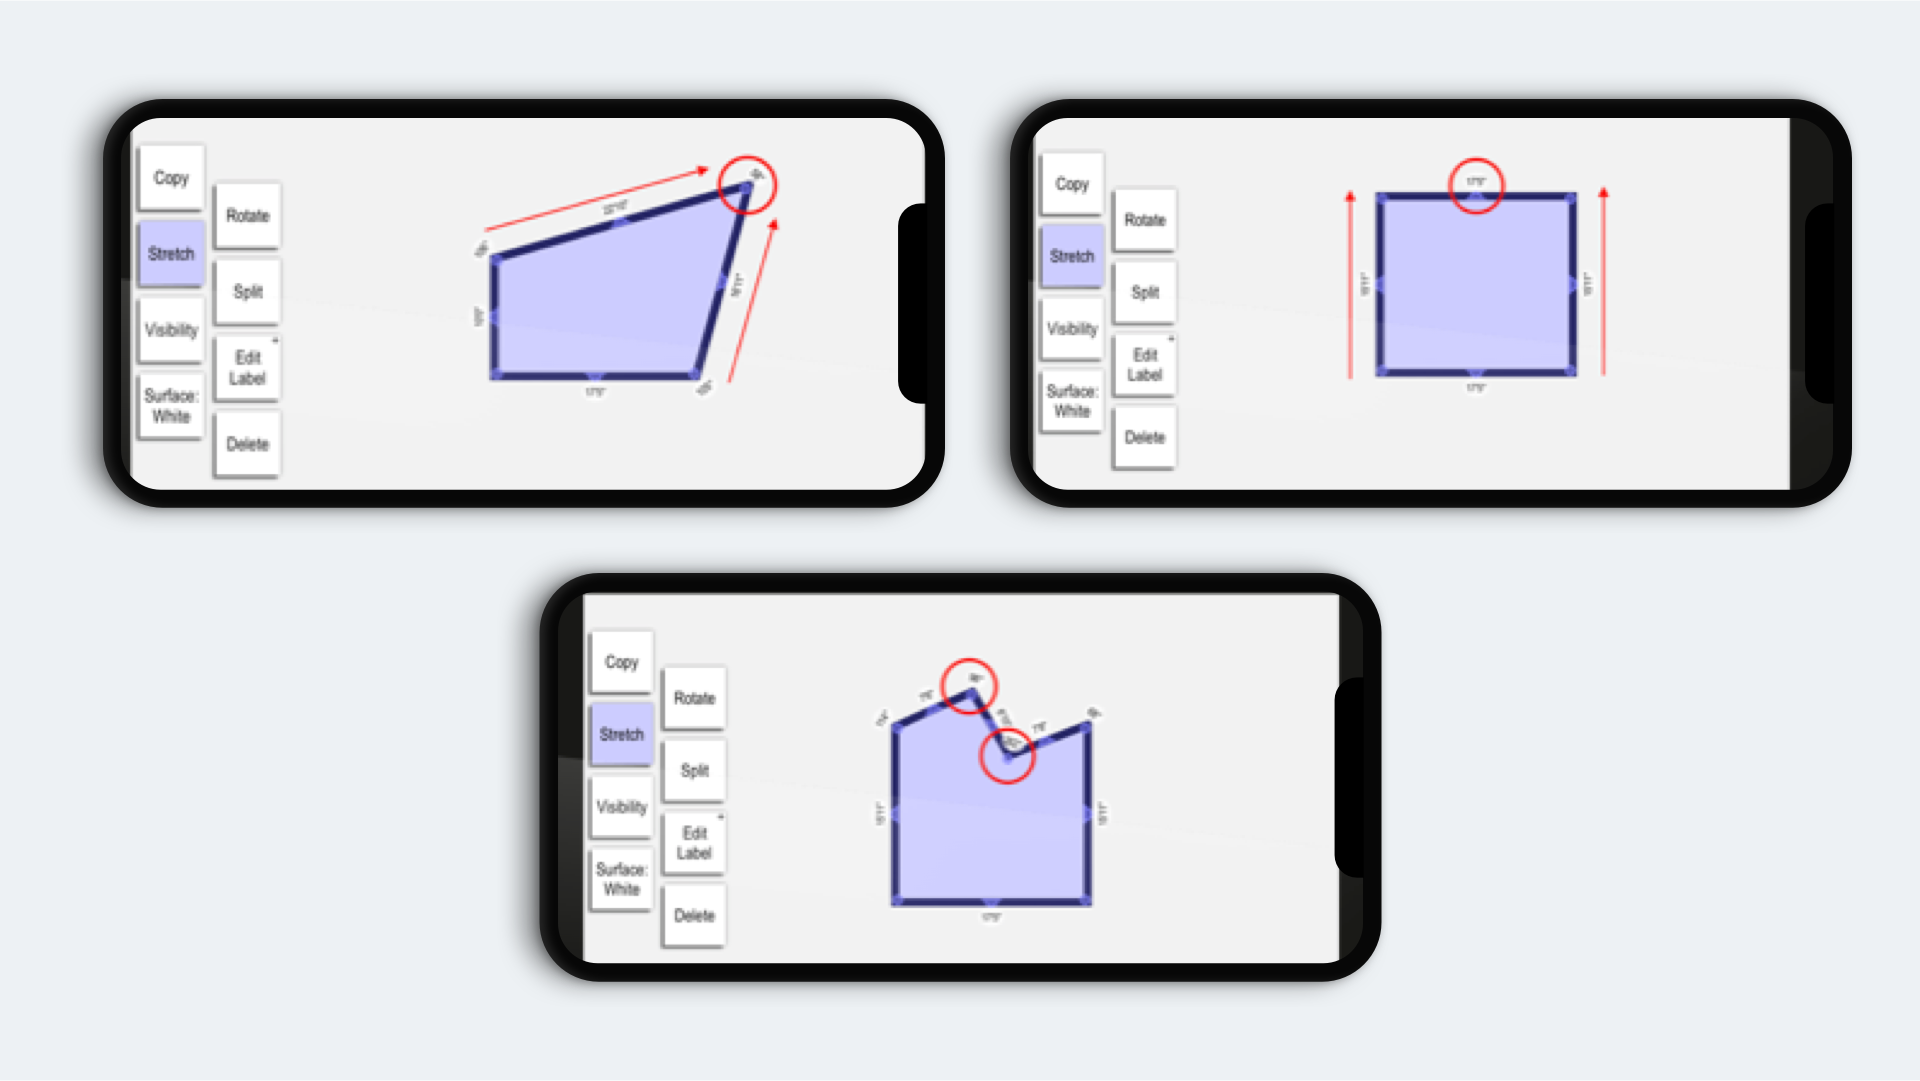 sketchup app snap to grid